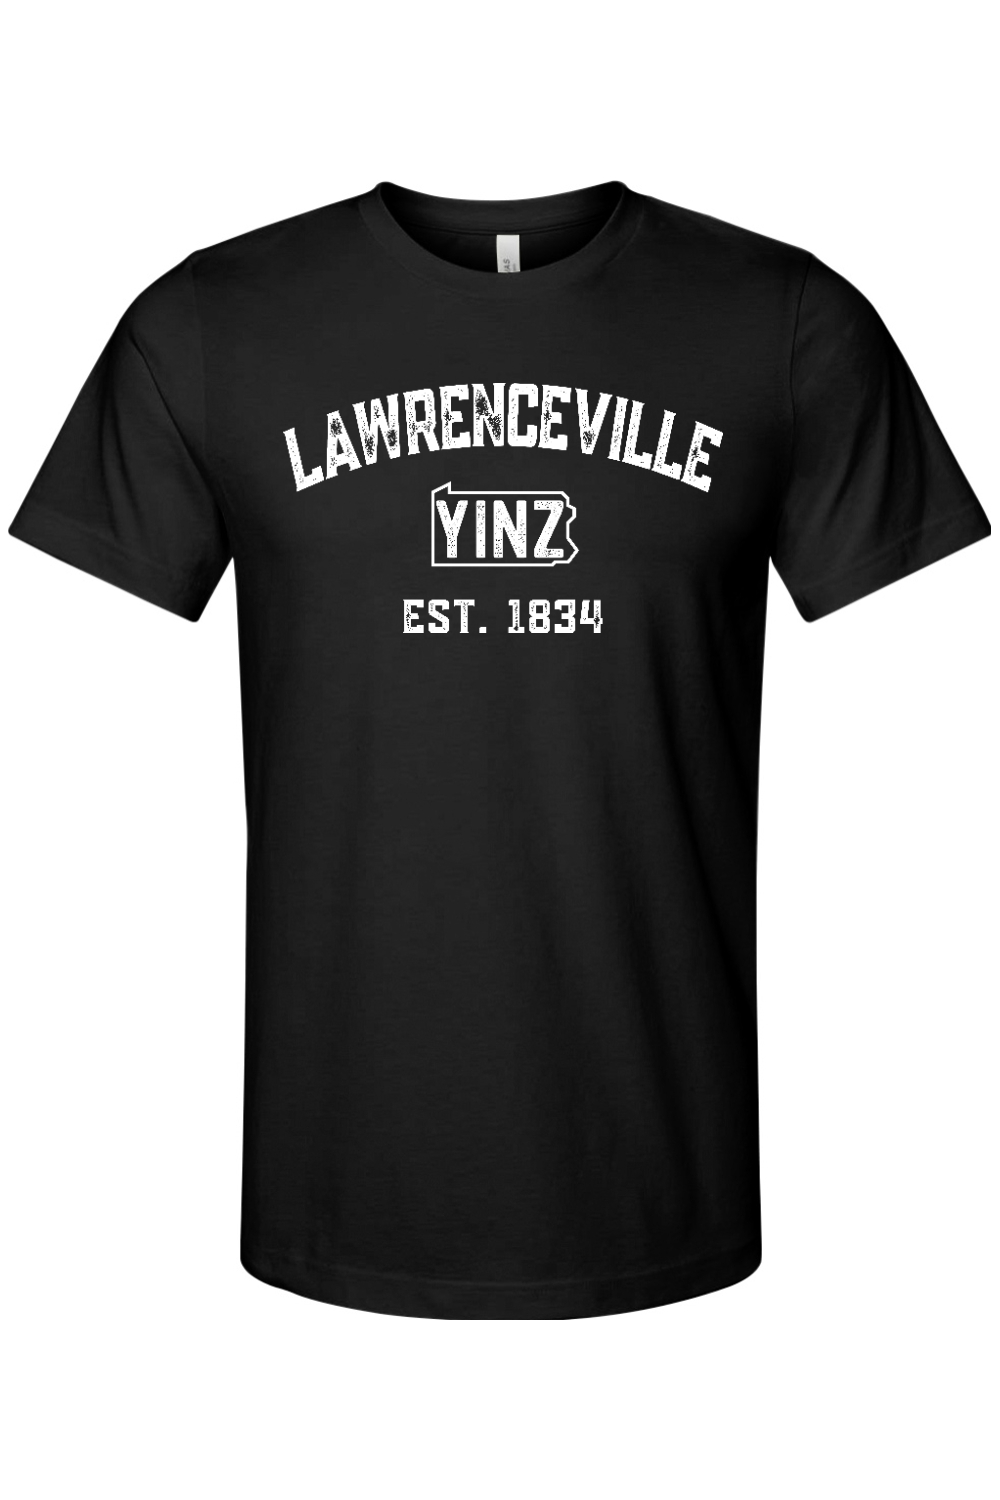 Lawrenceville Yinzylvania - Yinzylvania